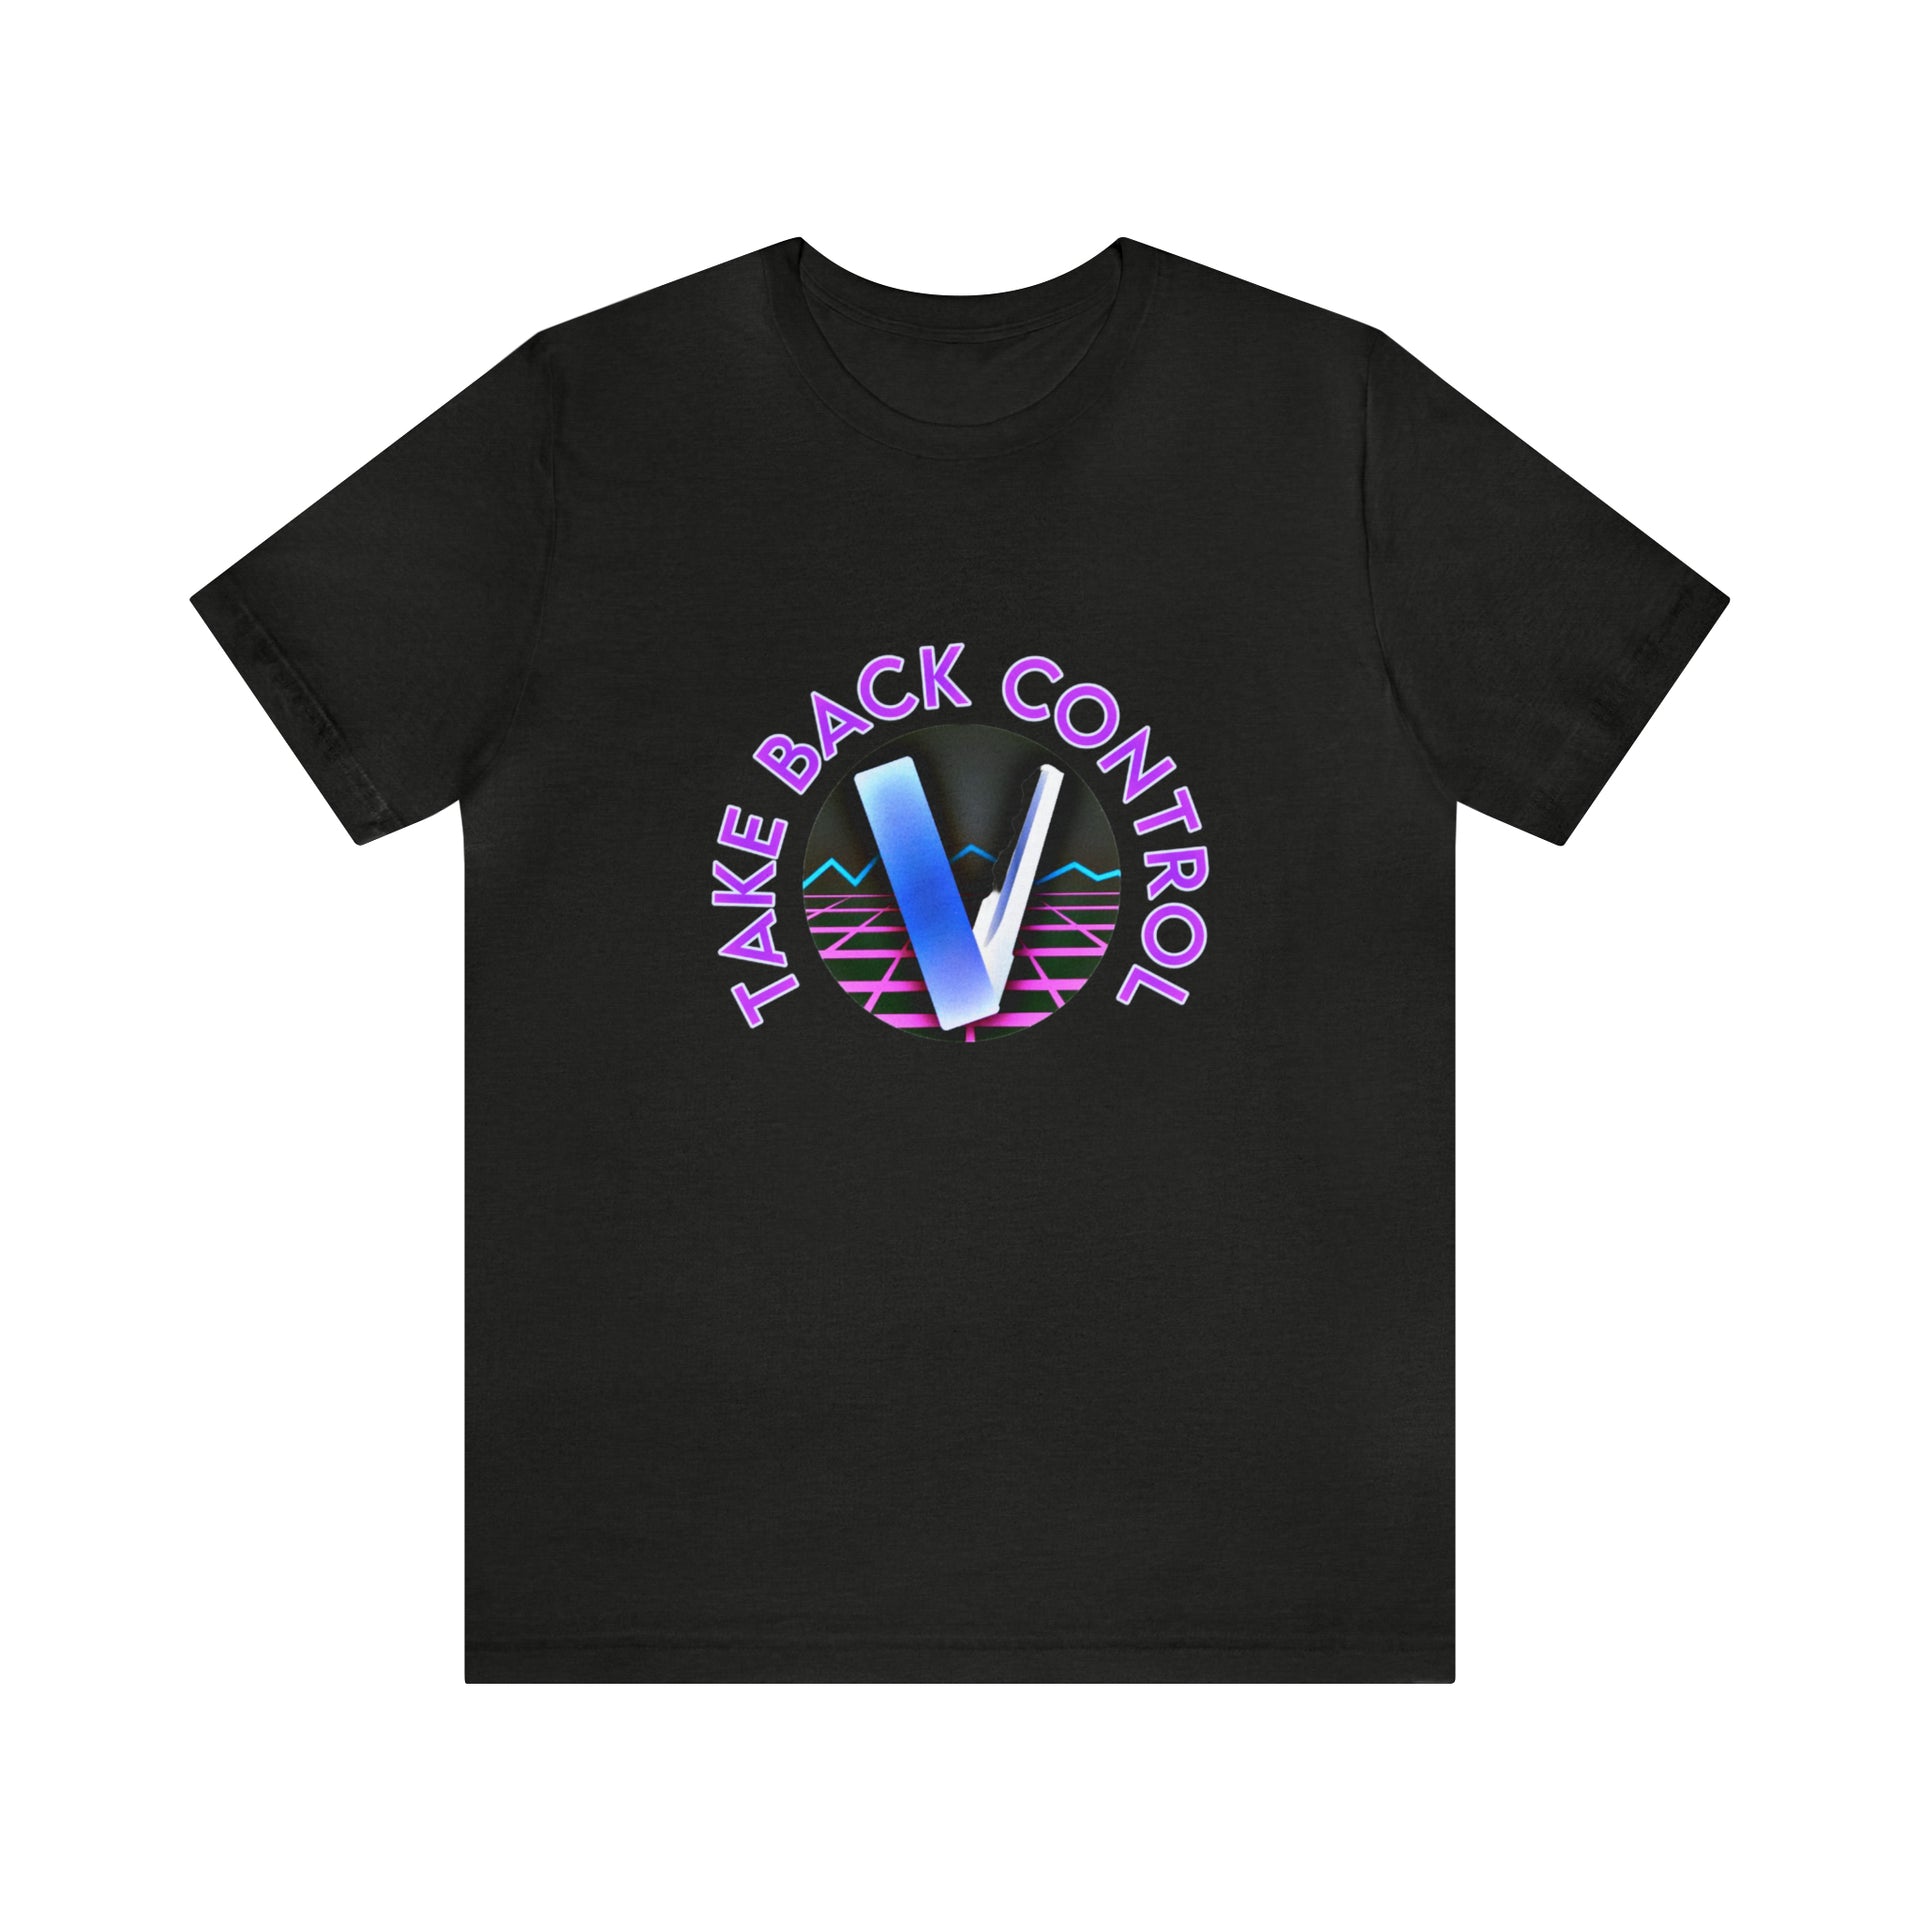 Take Back Control (Unisex T-Shirt)